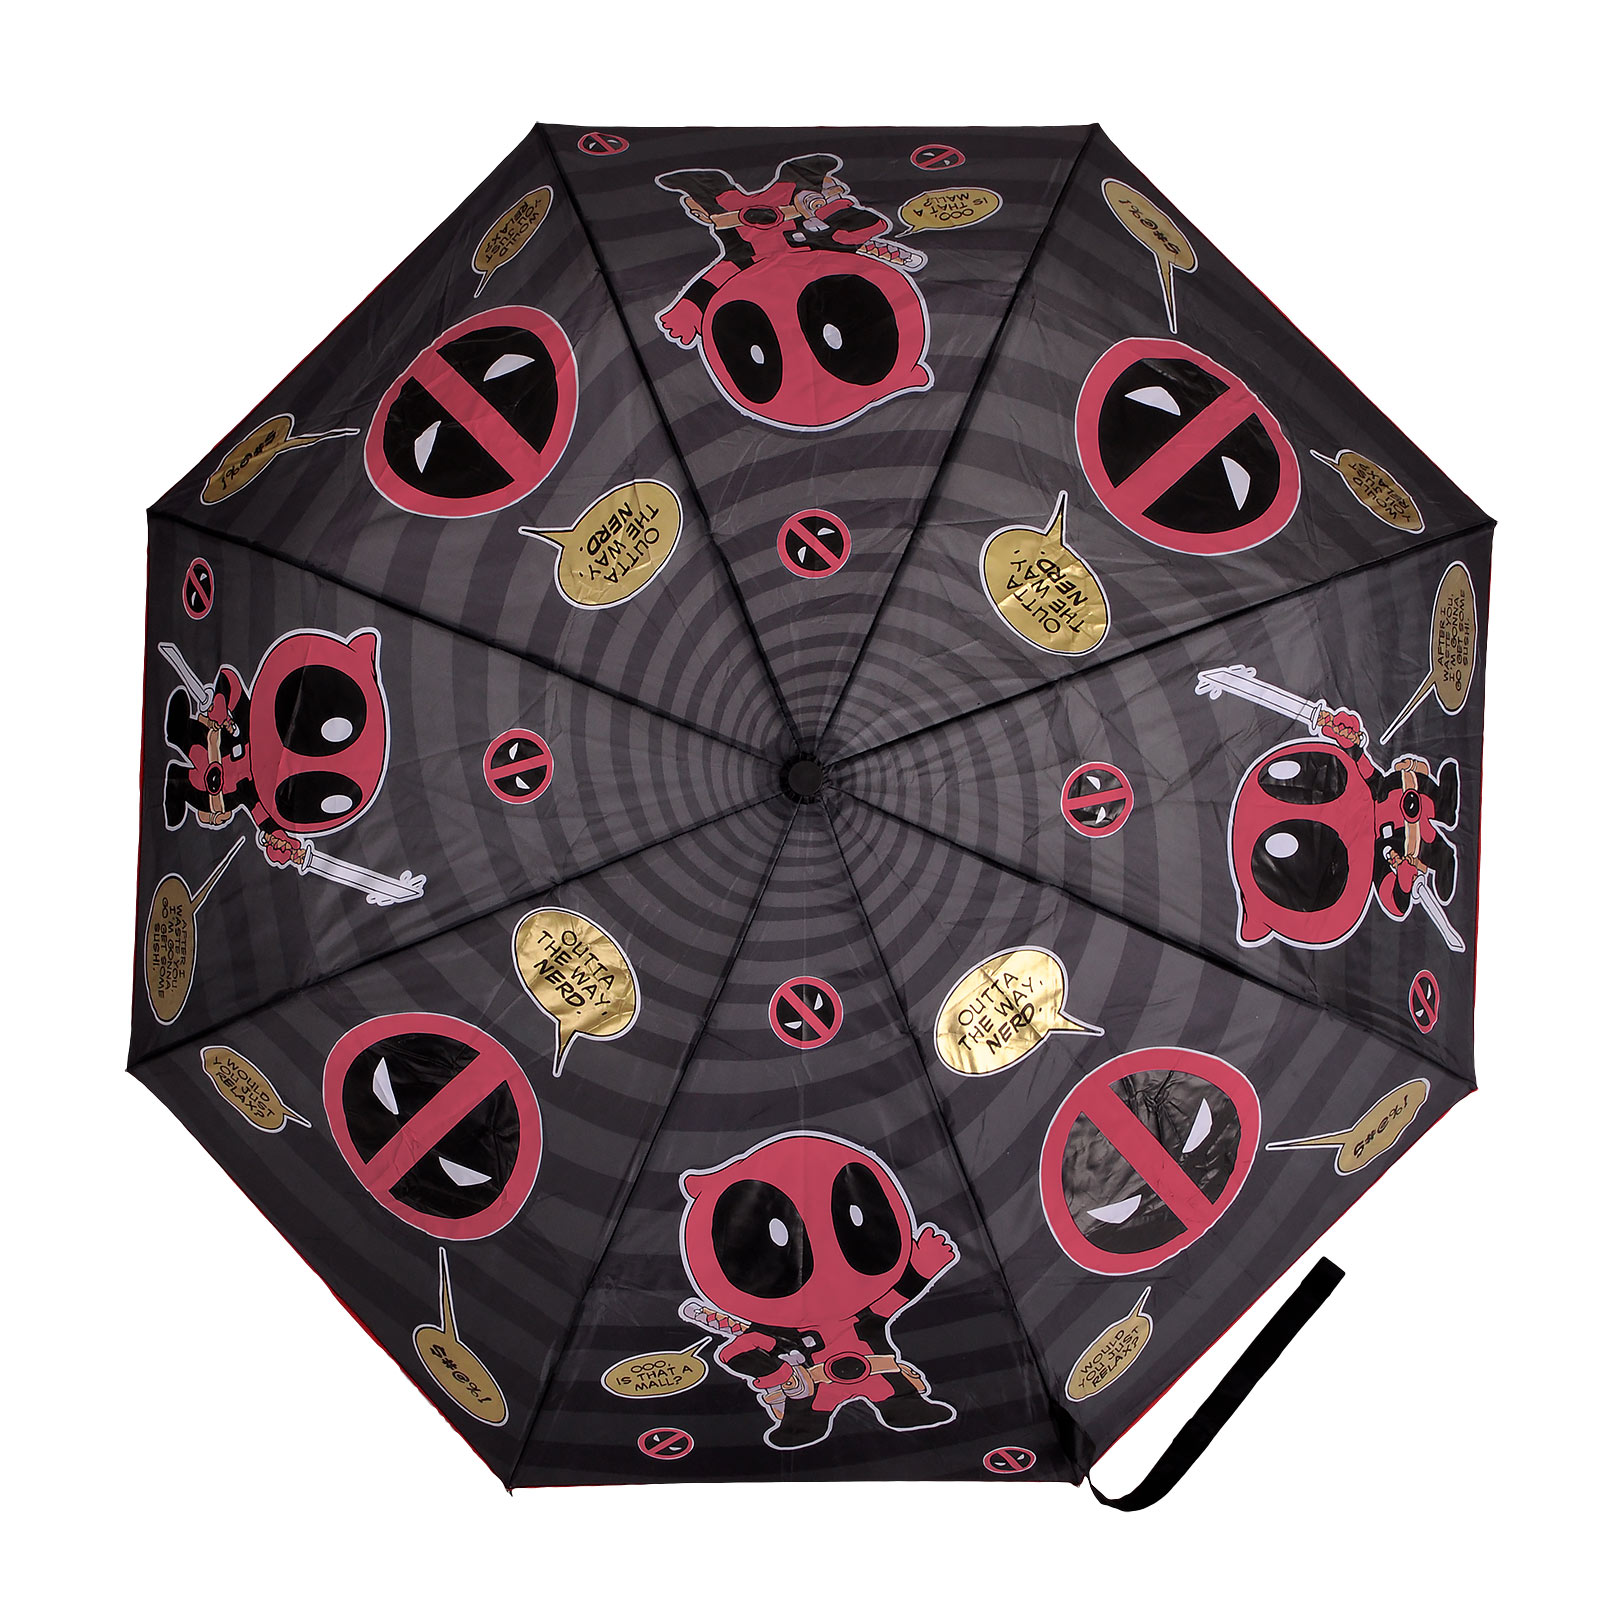 Deadpool - Chibi Umbrella with Aqua Effect